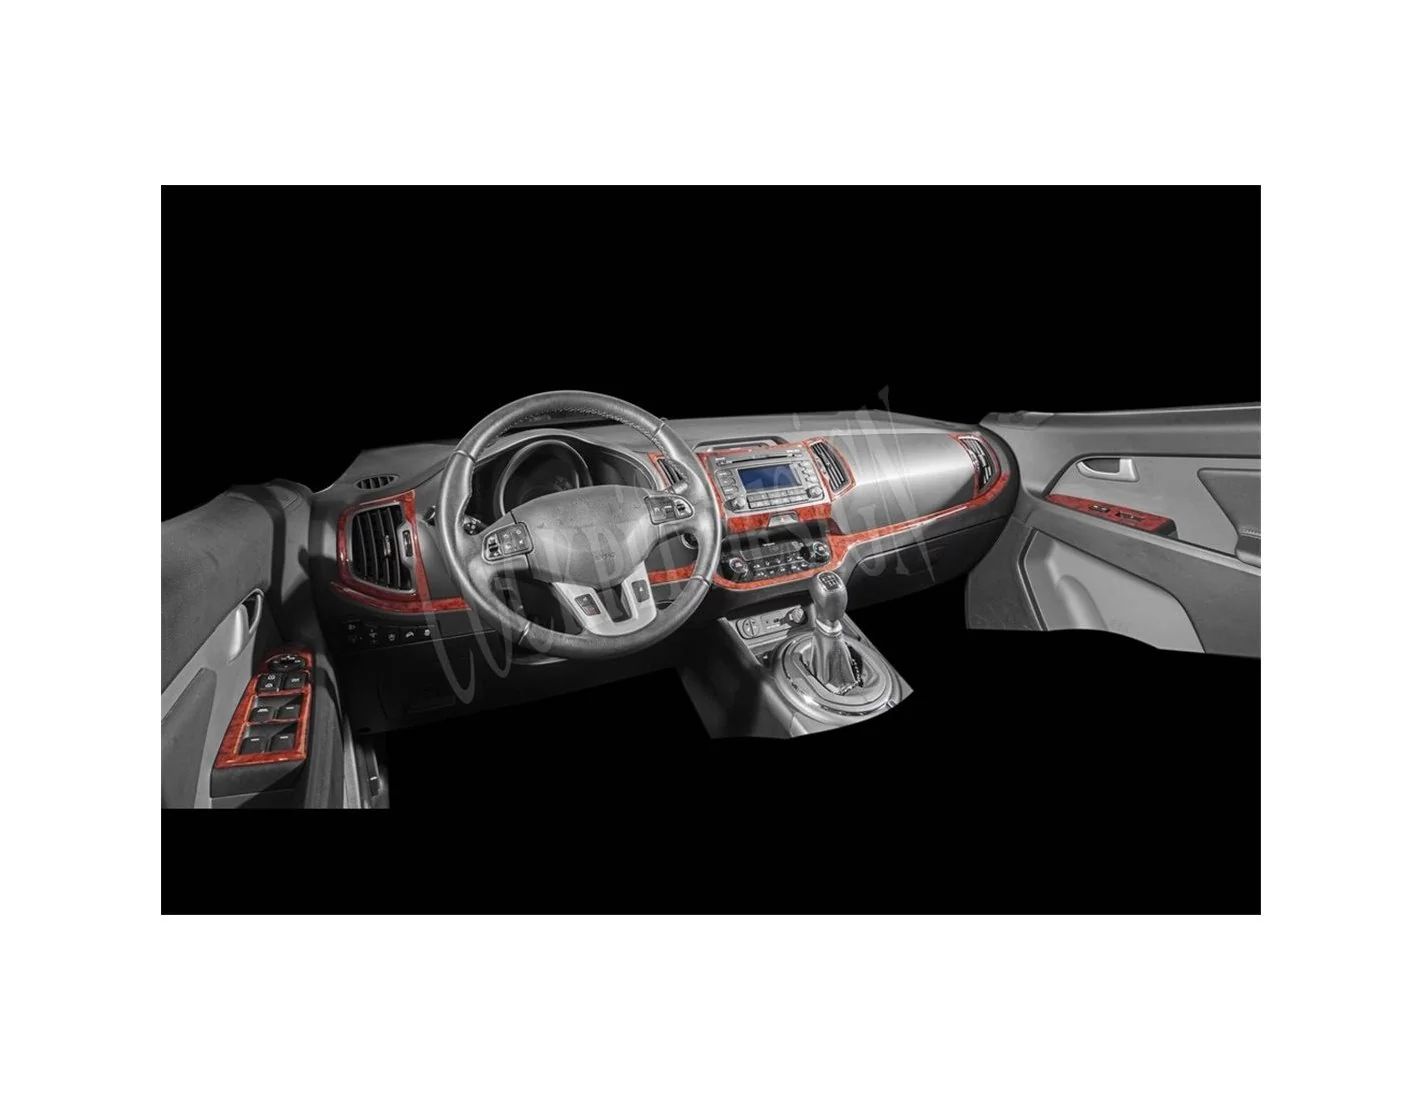 Kia Sportage 01.2011 3D Decor de carlinga su interior del coche 15-Partes